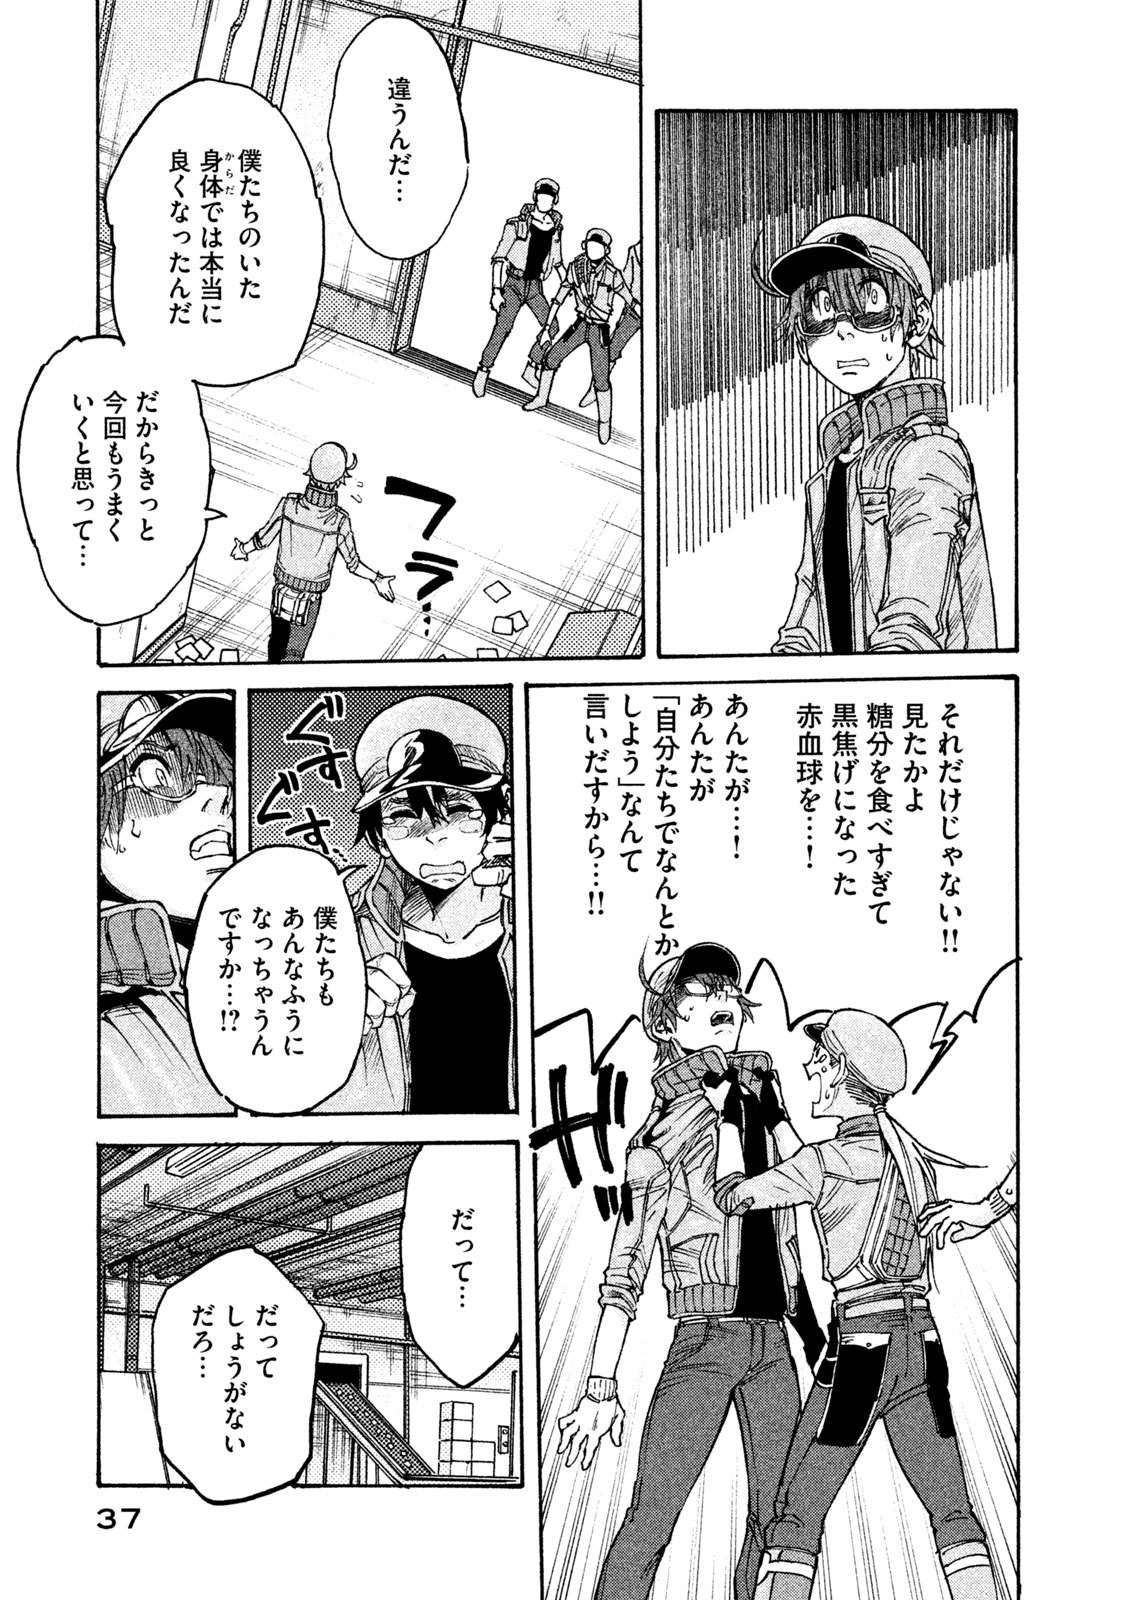 Hataraku Saibou BLACK - Chapter 19 - Page 16